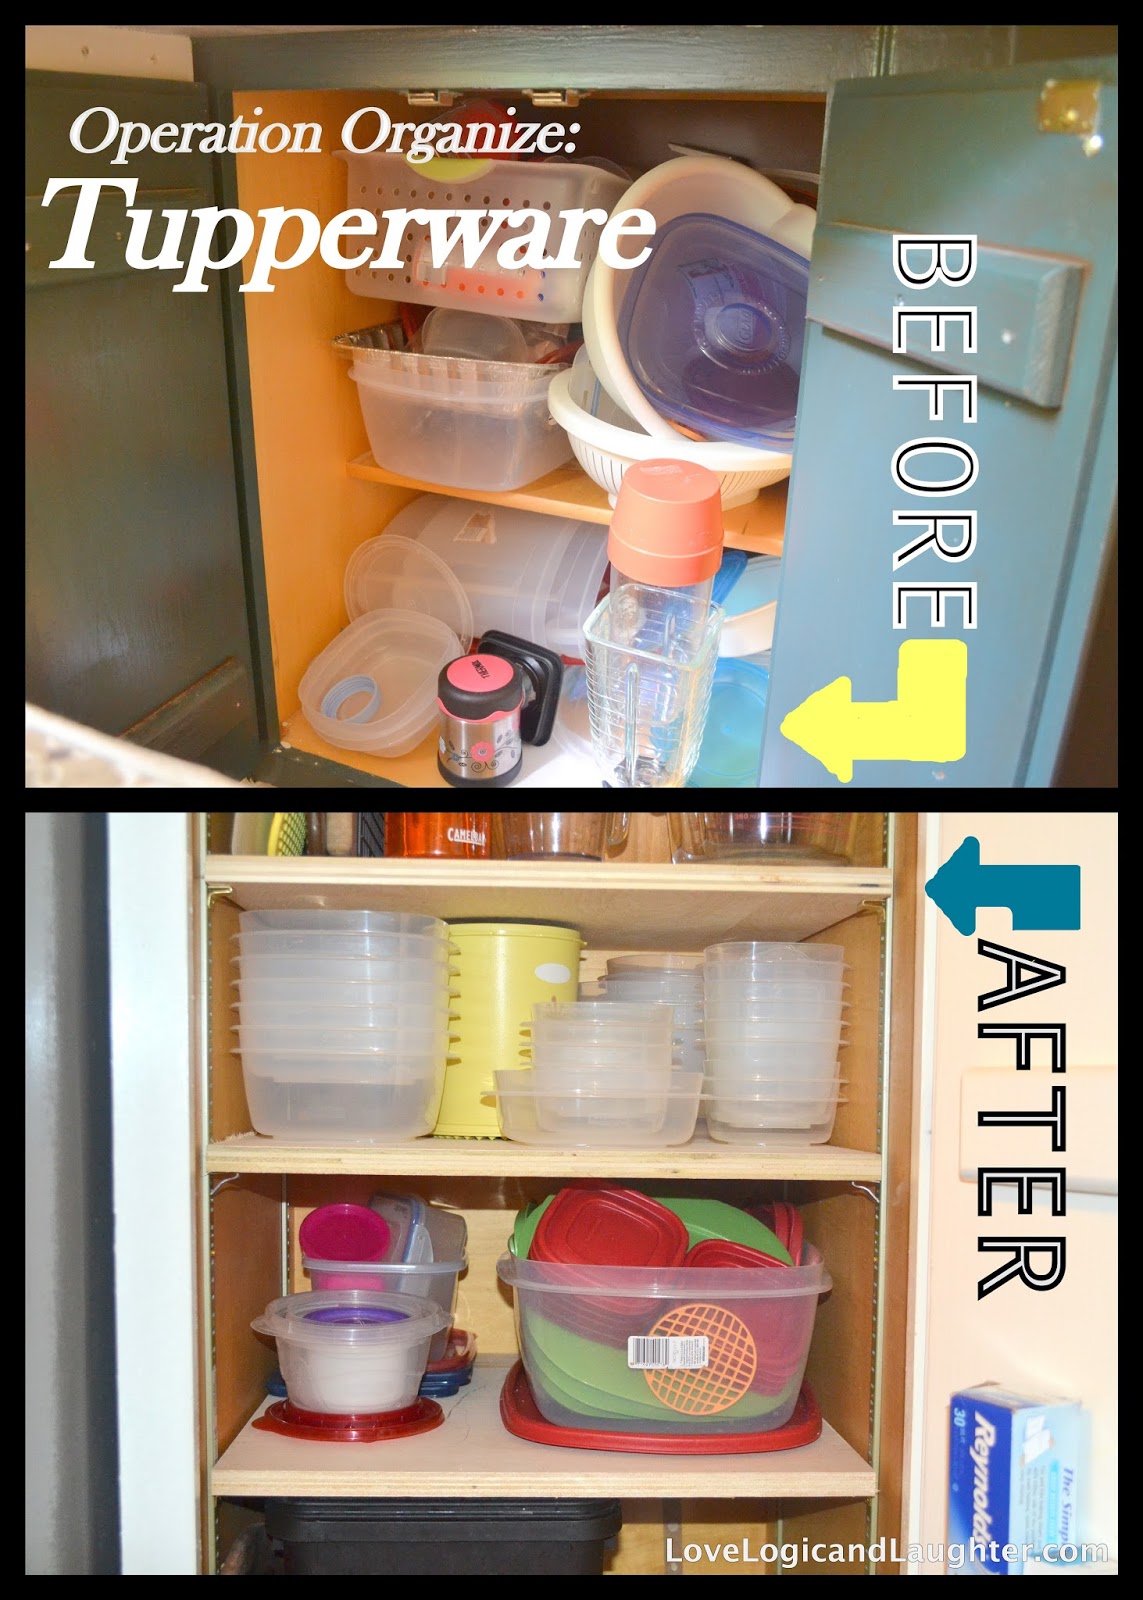 Operation Organize - Tupperware